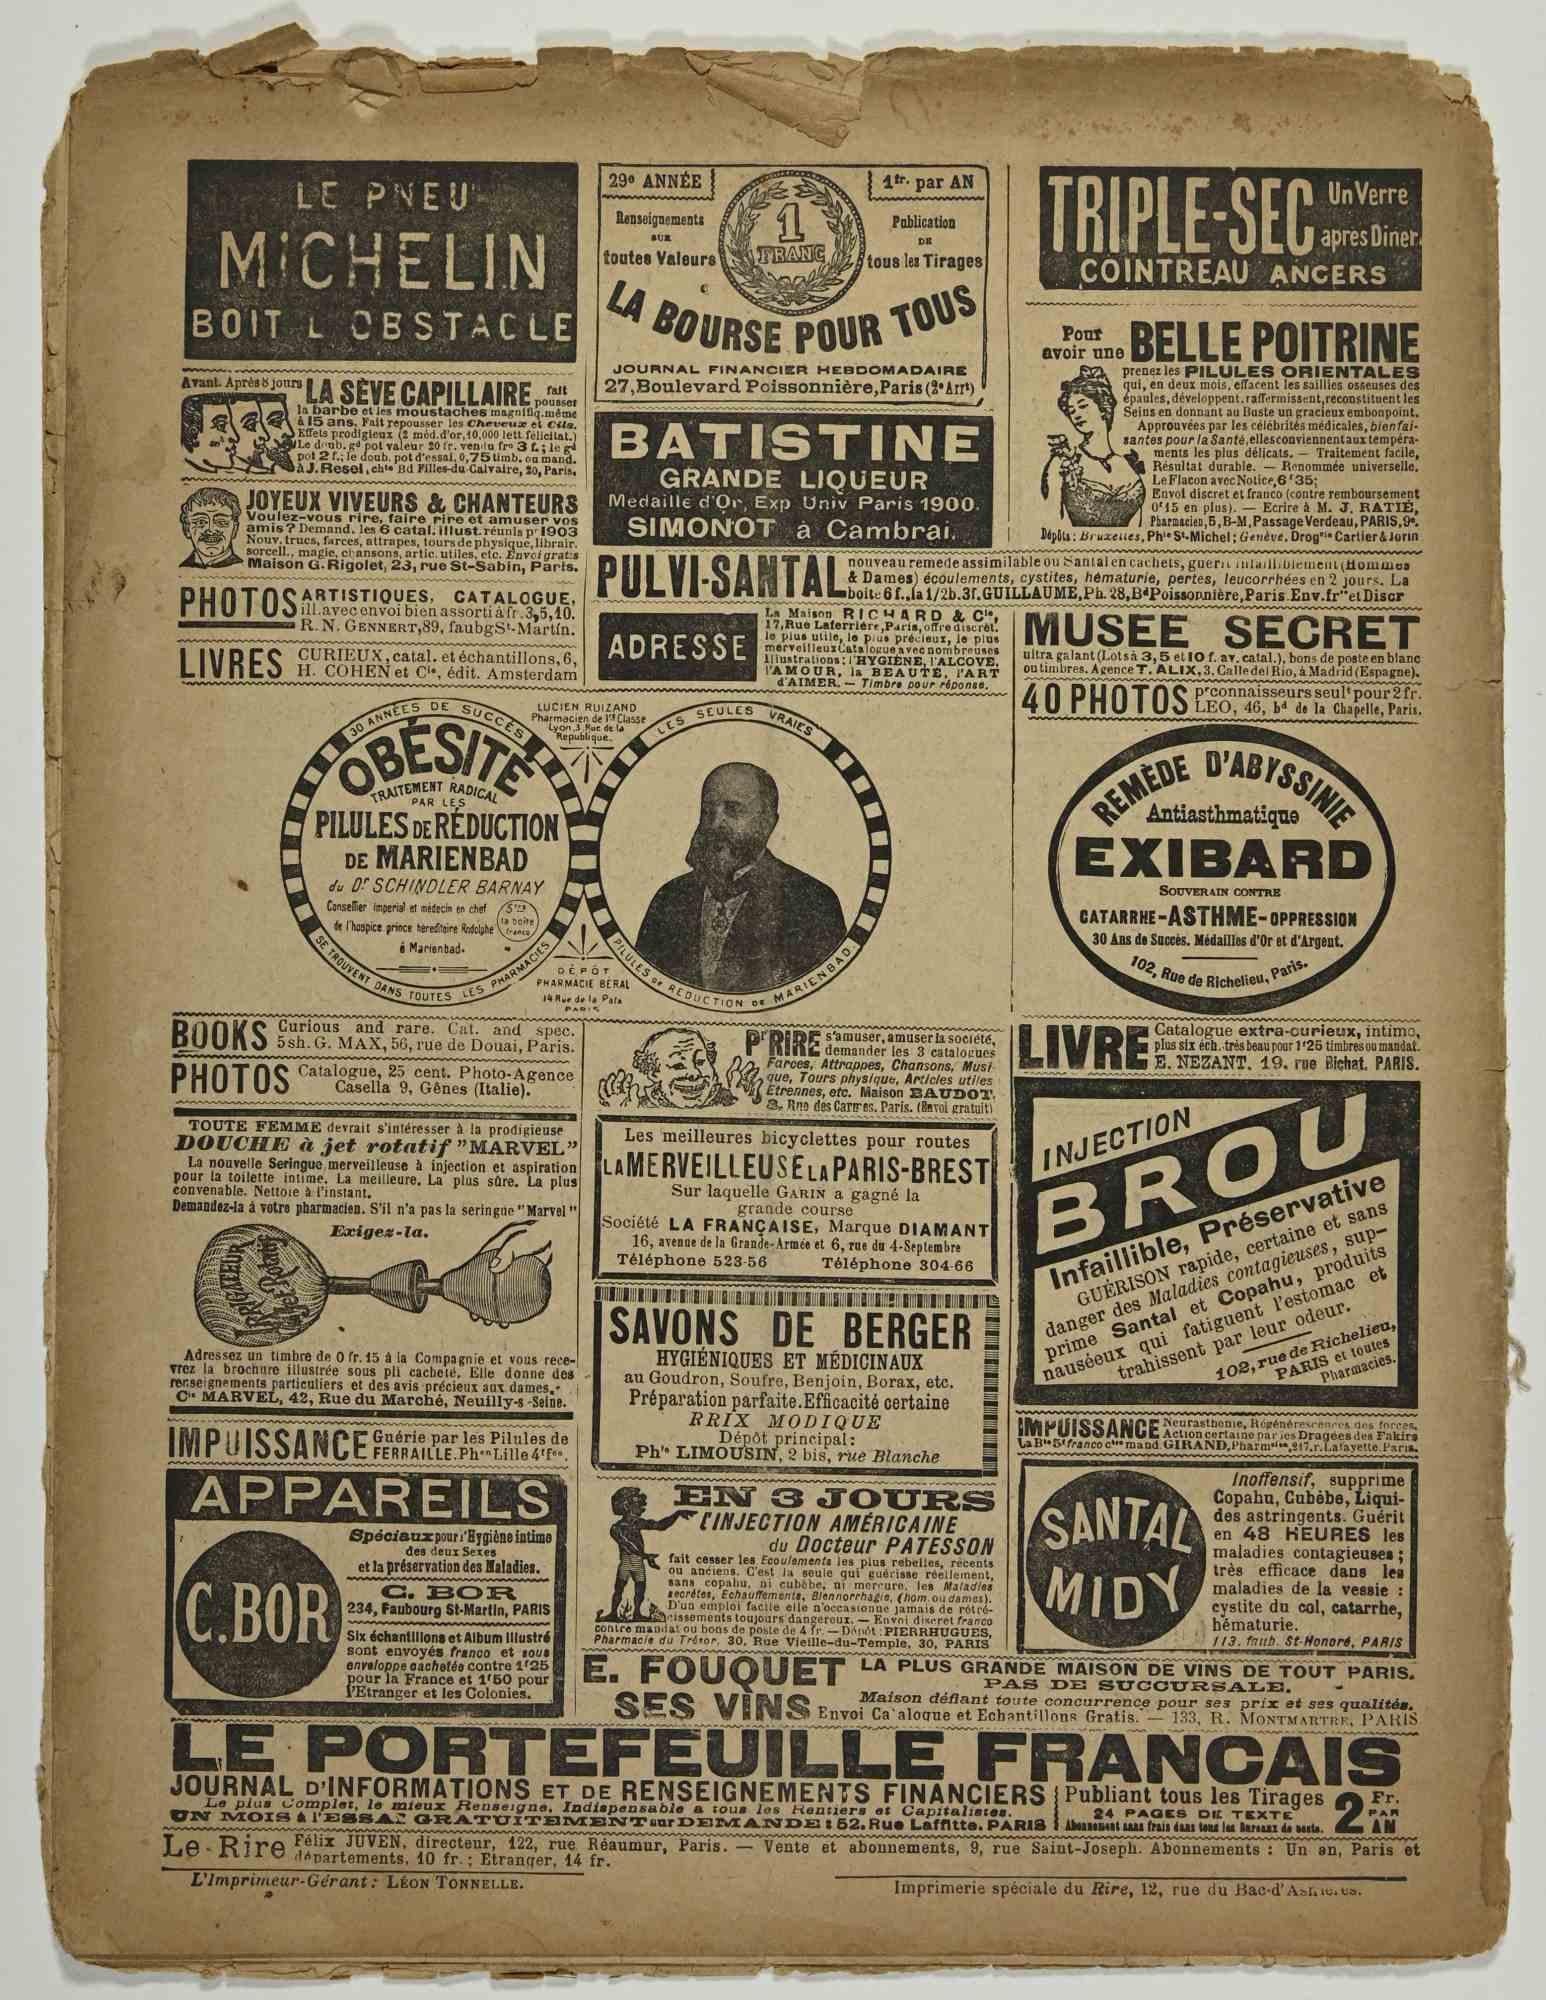 Le Rire - Illustrated Magazine after Lucien Metivet - 1902 - Modern Art by Lucien Métivet